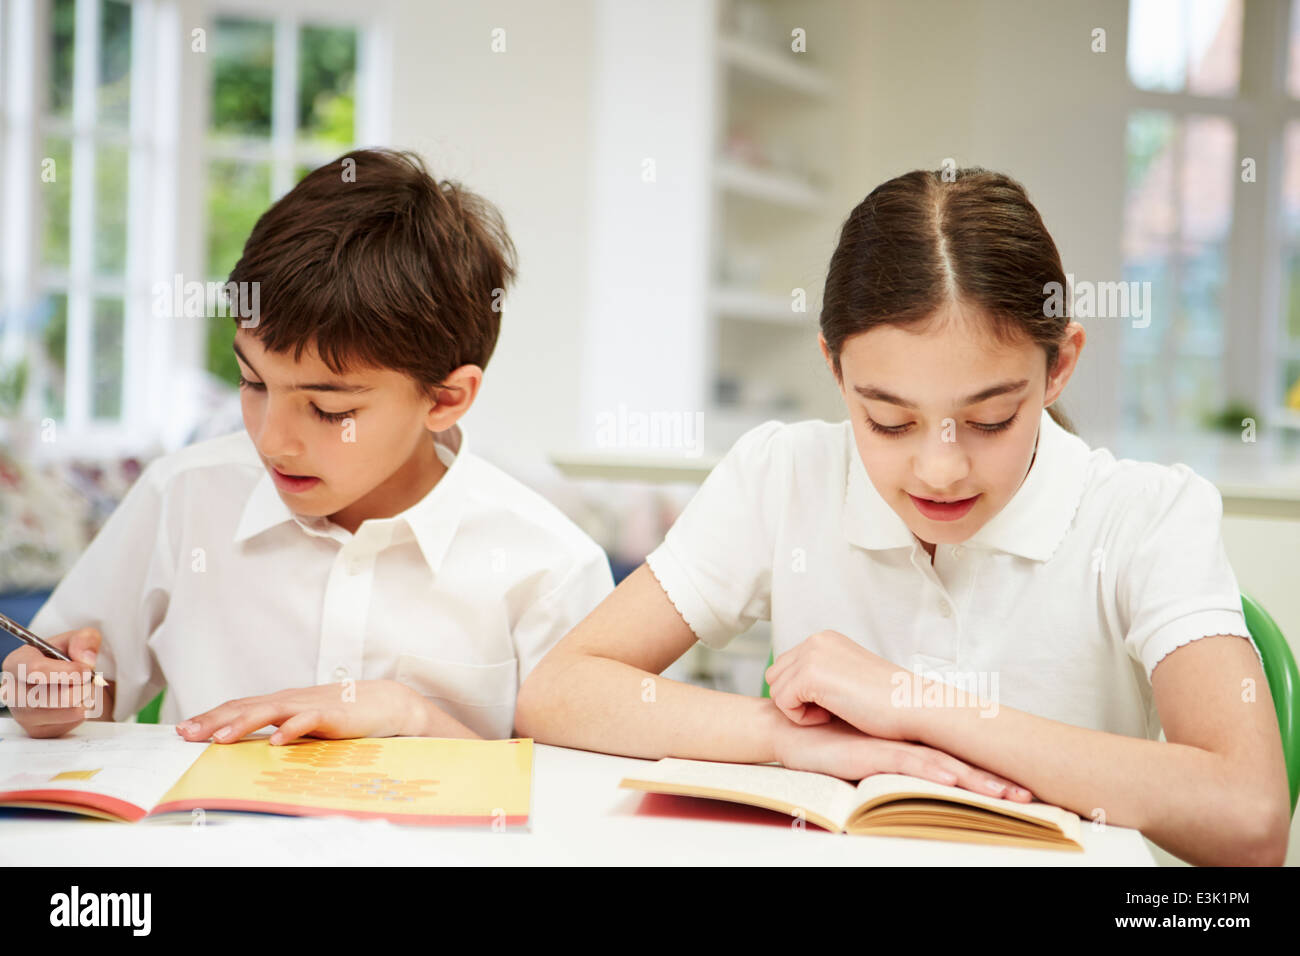 Children Wearing School Uniform Doing Homework In Kitchen Stock Photo